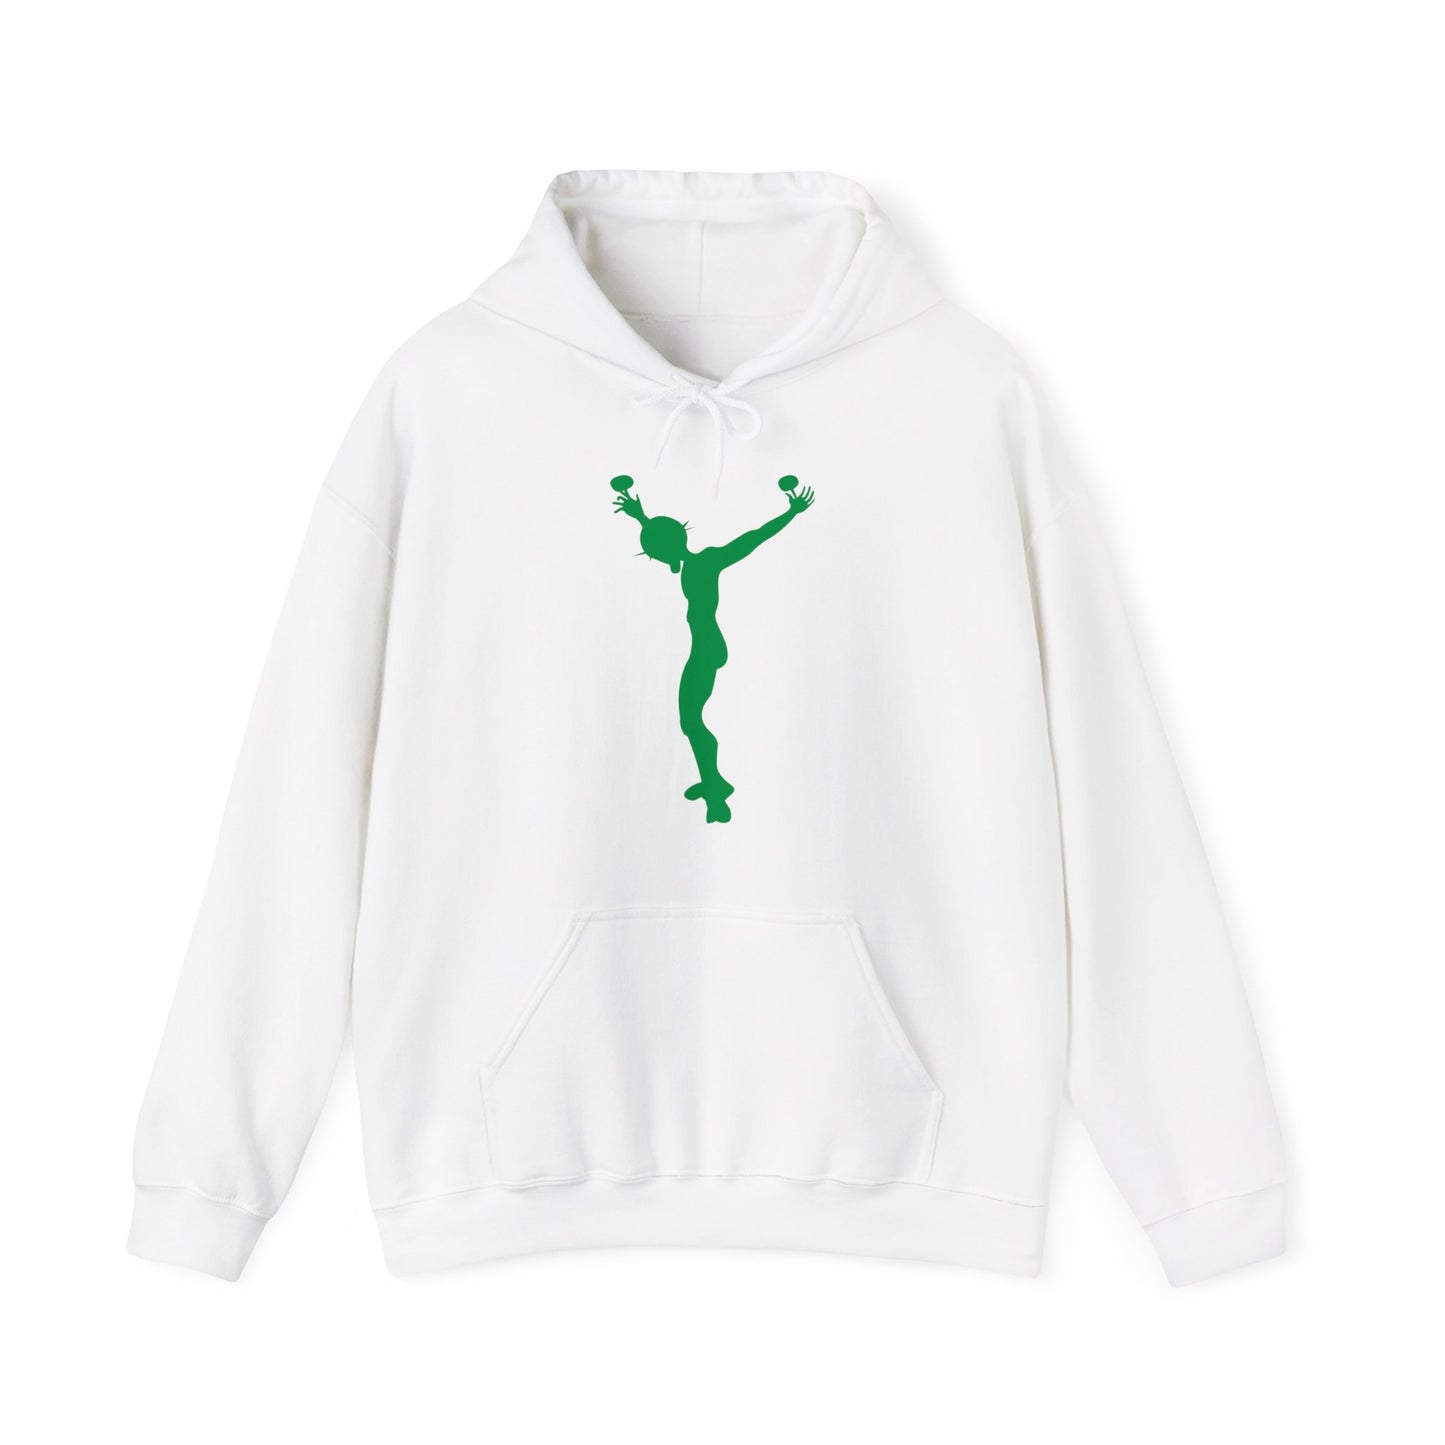 j7 hoodie white-green